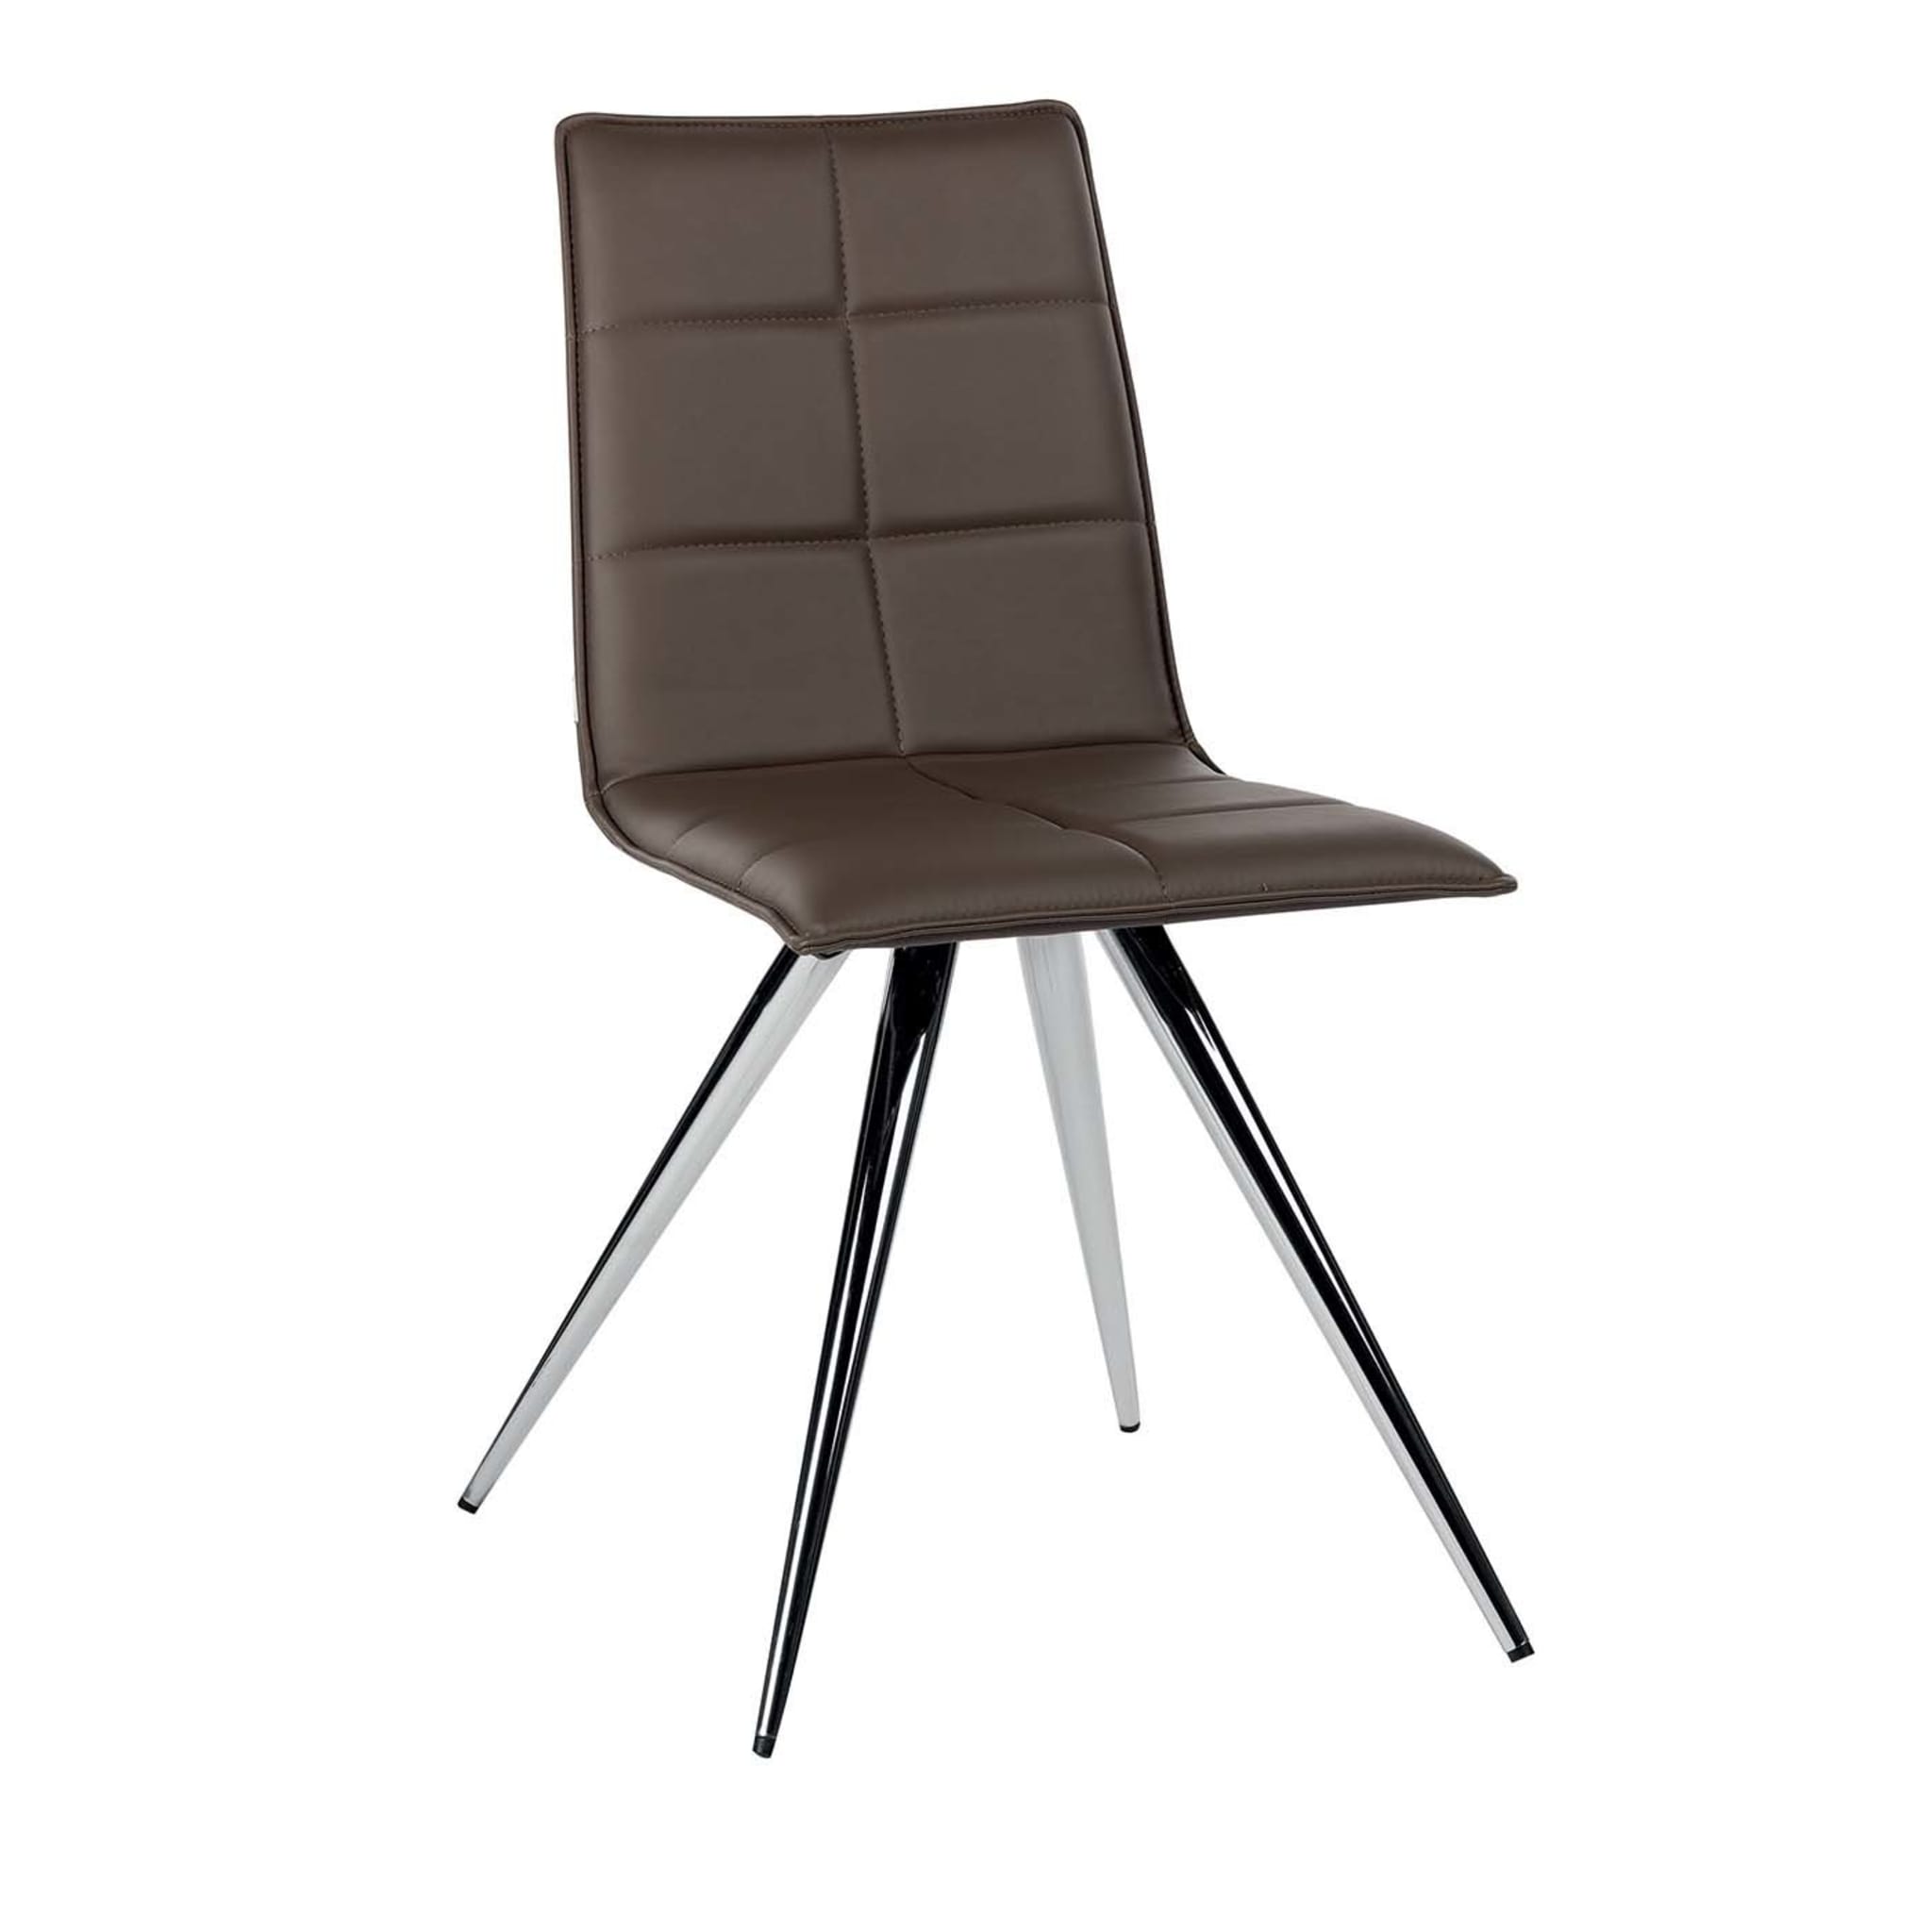 Gliris Chair with Metal Base - Main view